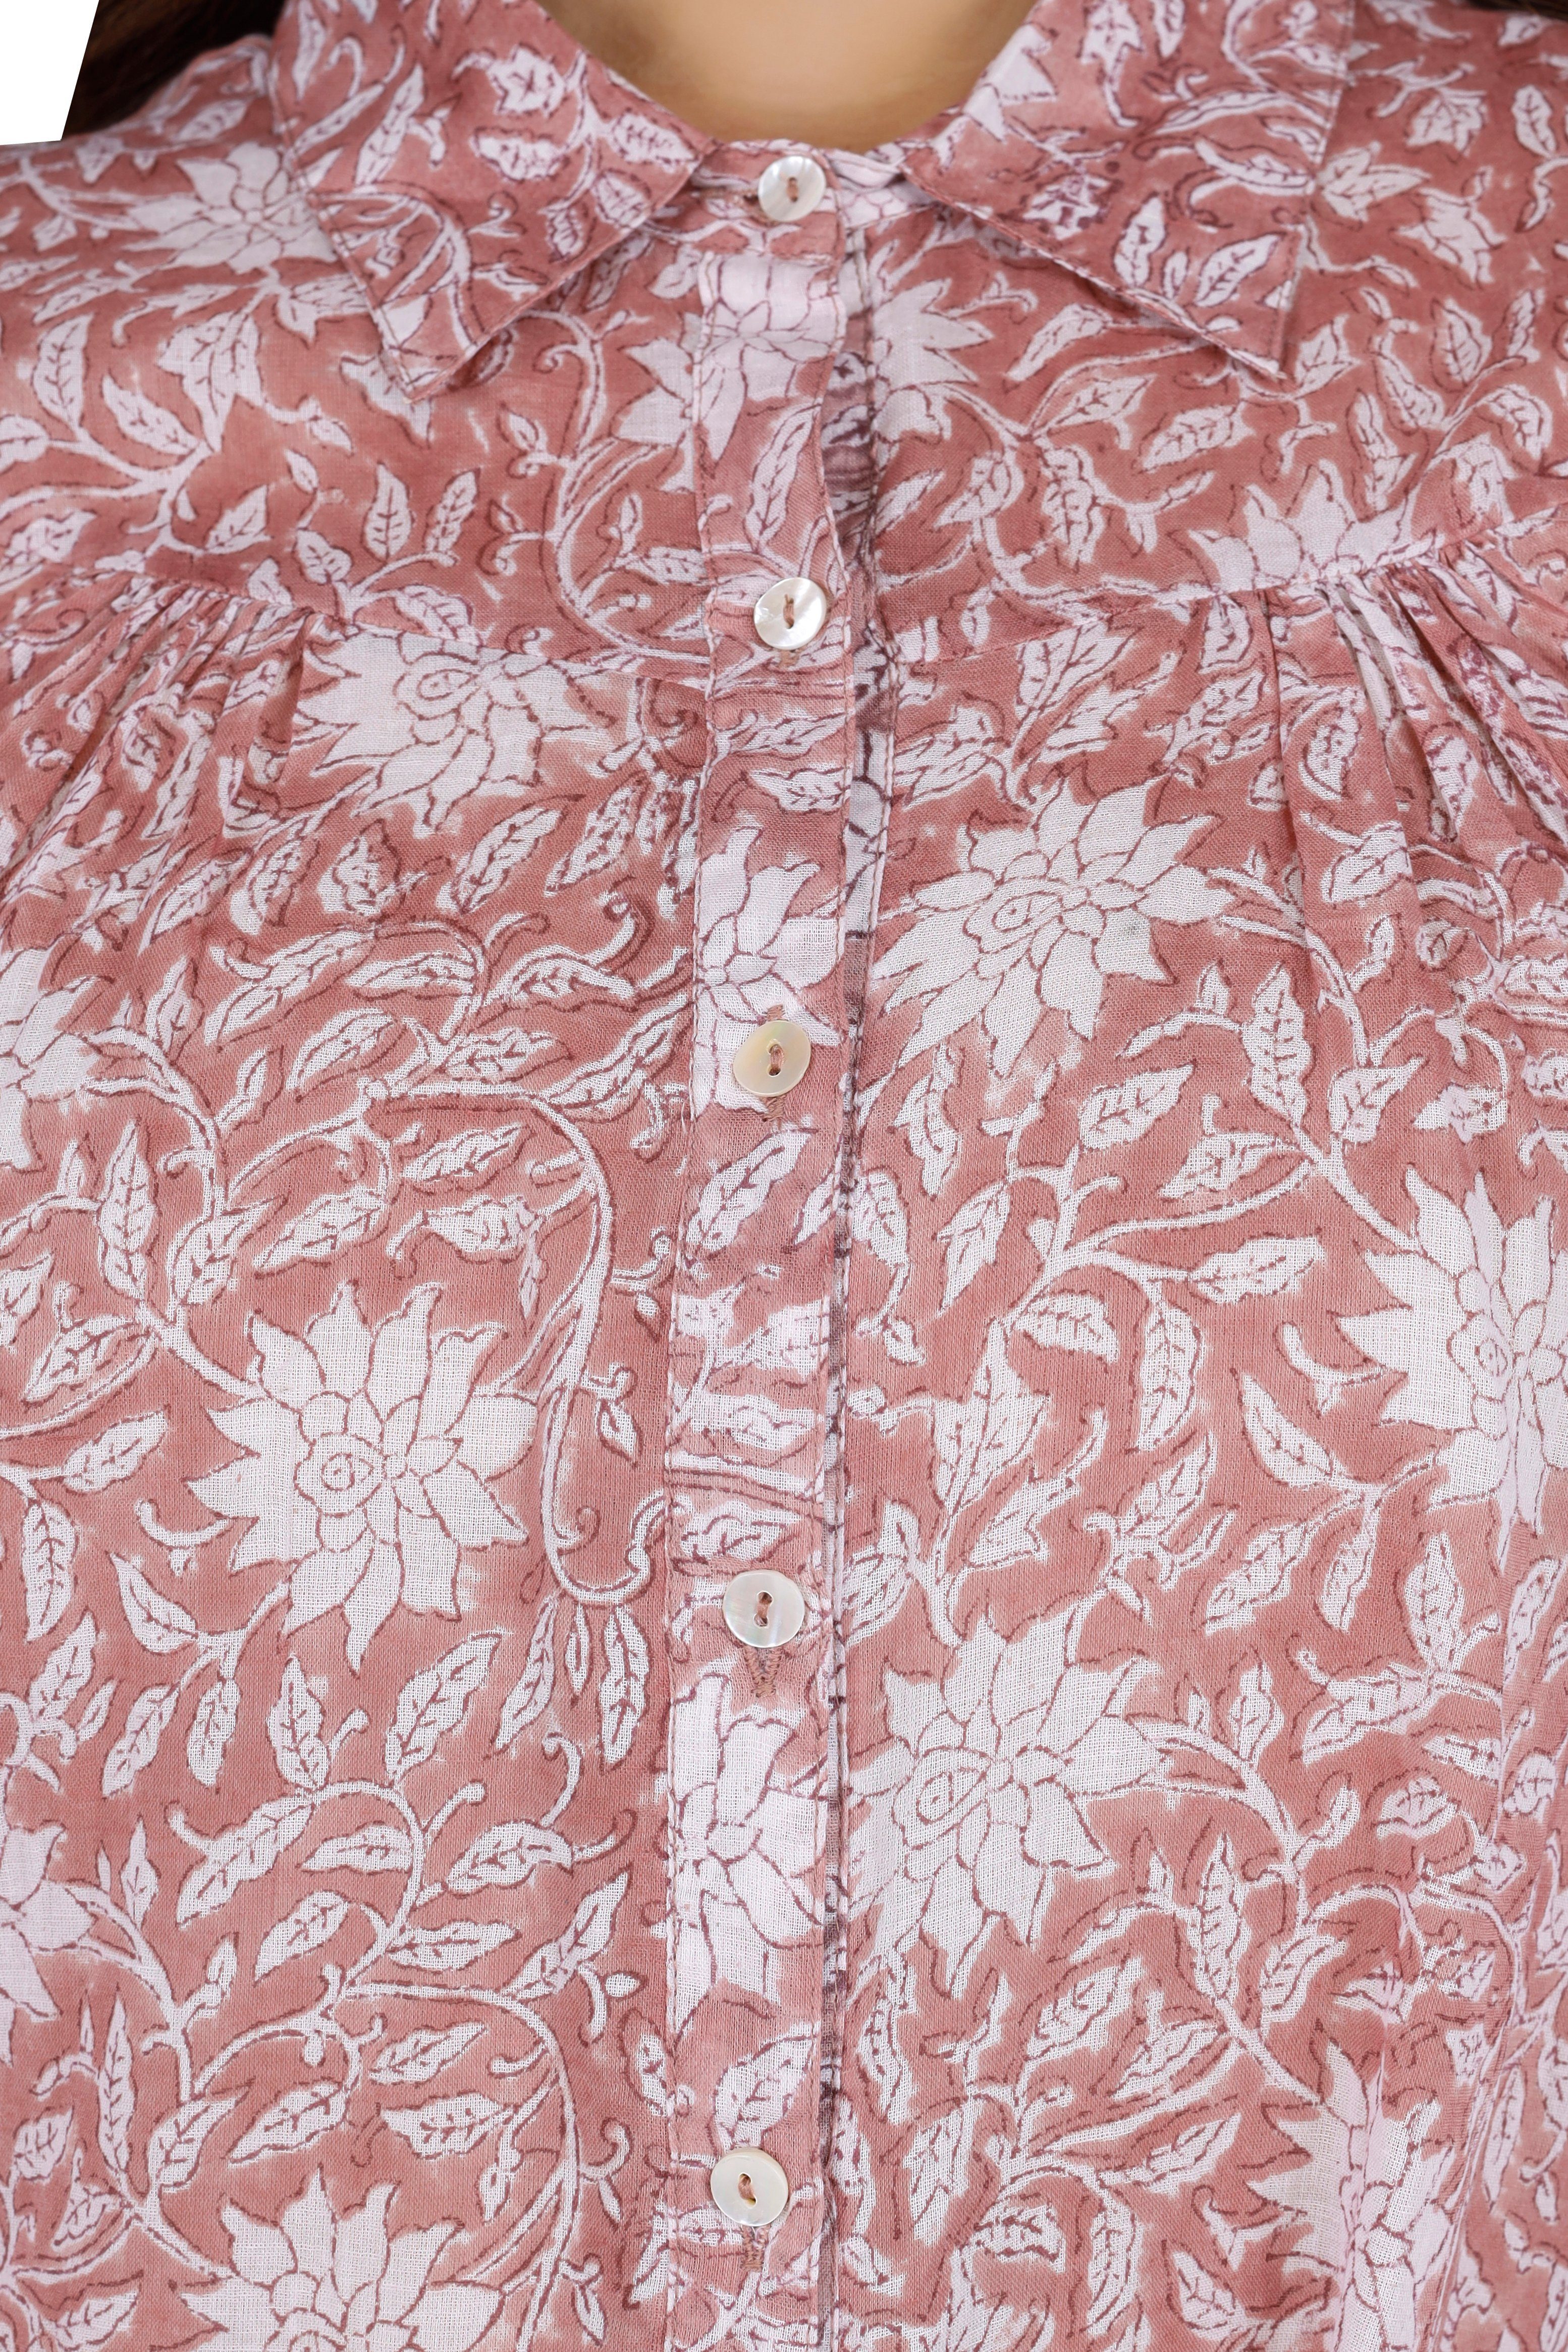 Bekleidung Handbedruckte rosa Longbluse Baumwollbluse.. Bohobluse, alternative Guru-Shop luftige